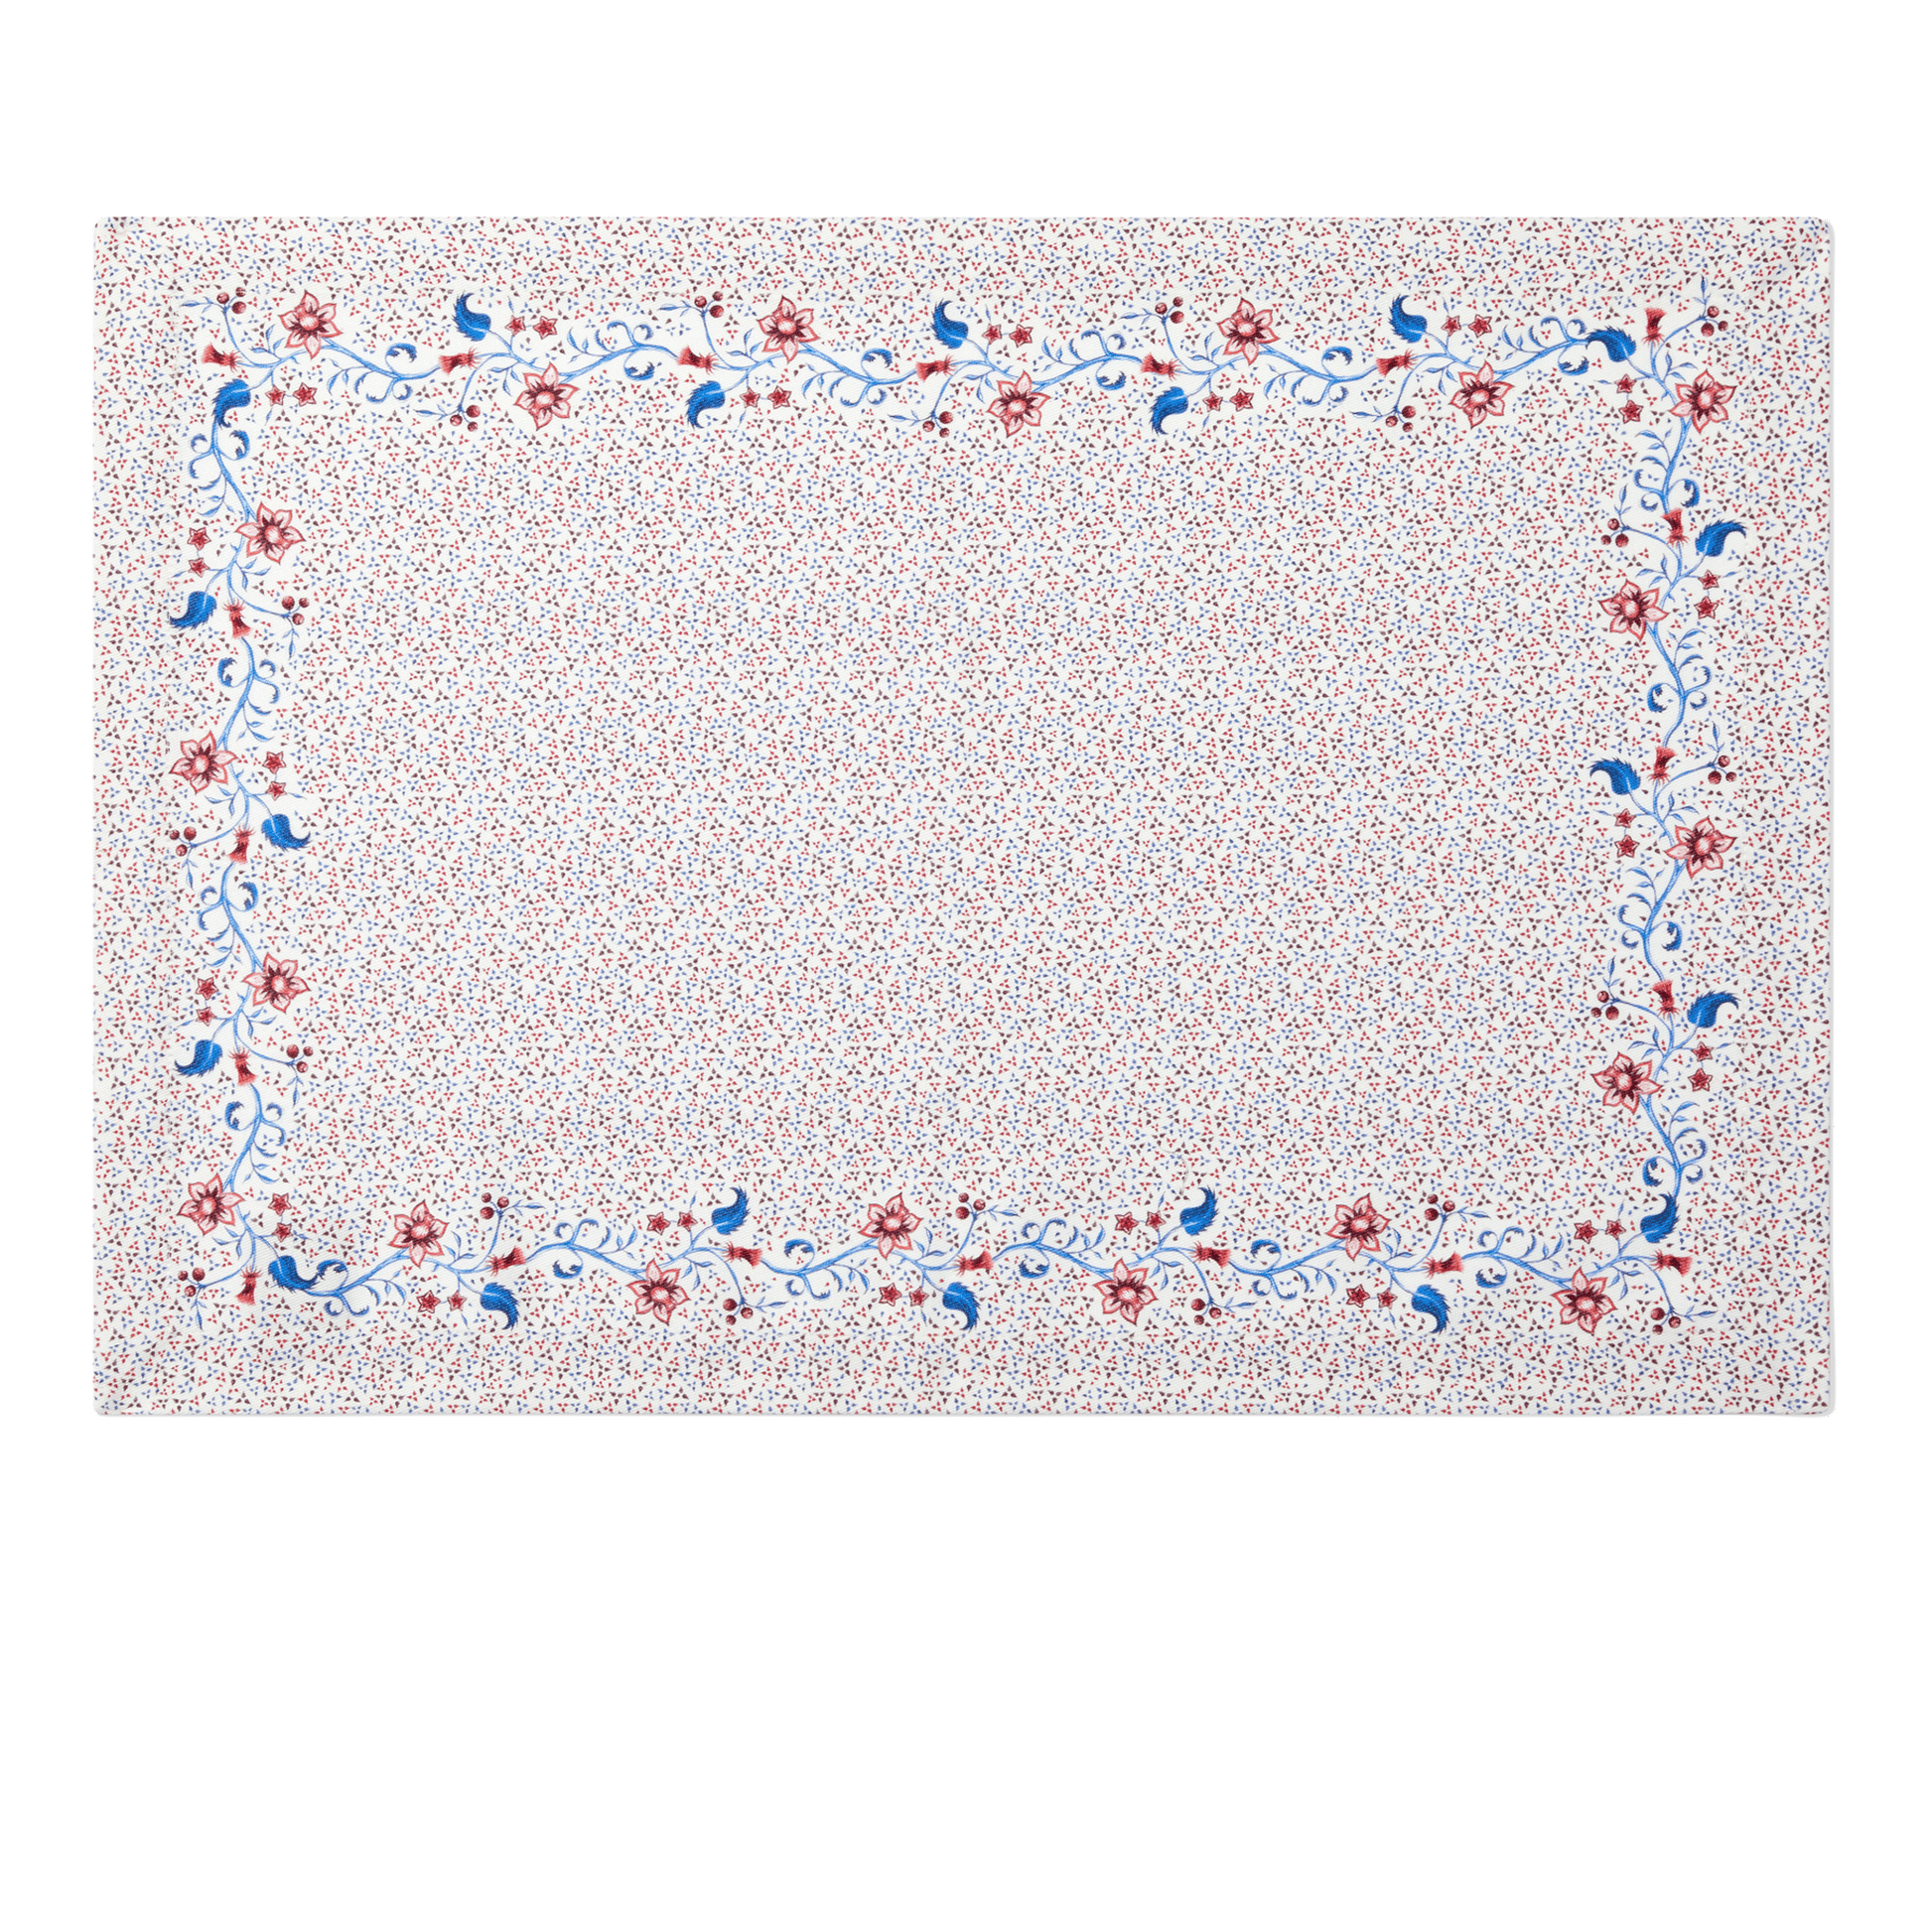 4-Piece Rectangular Placemat Set in Burgundy Floral Cotton